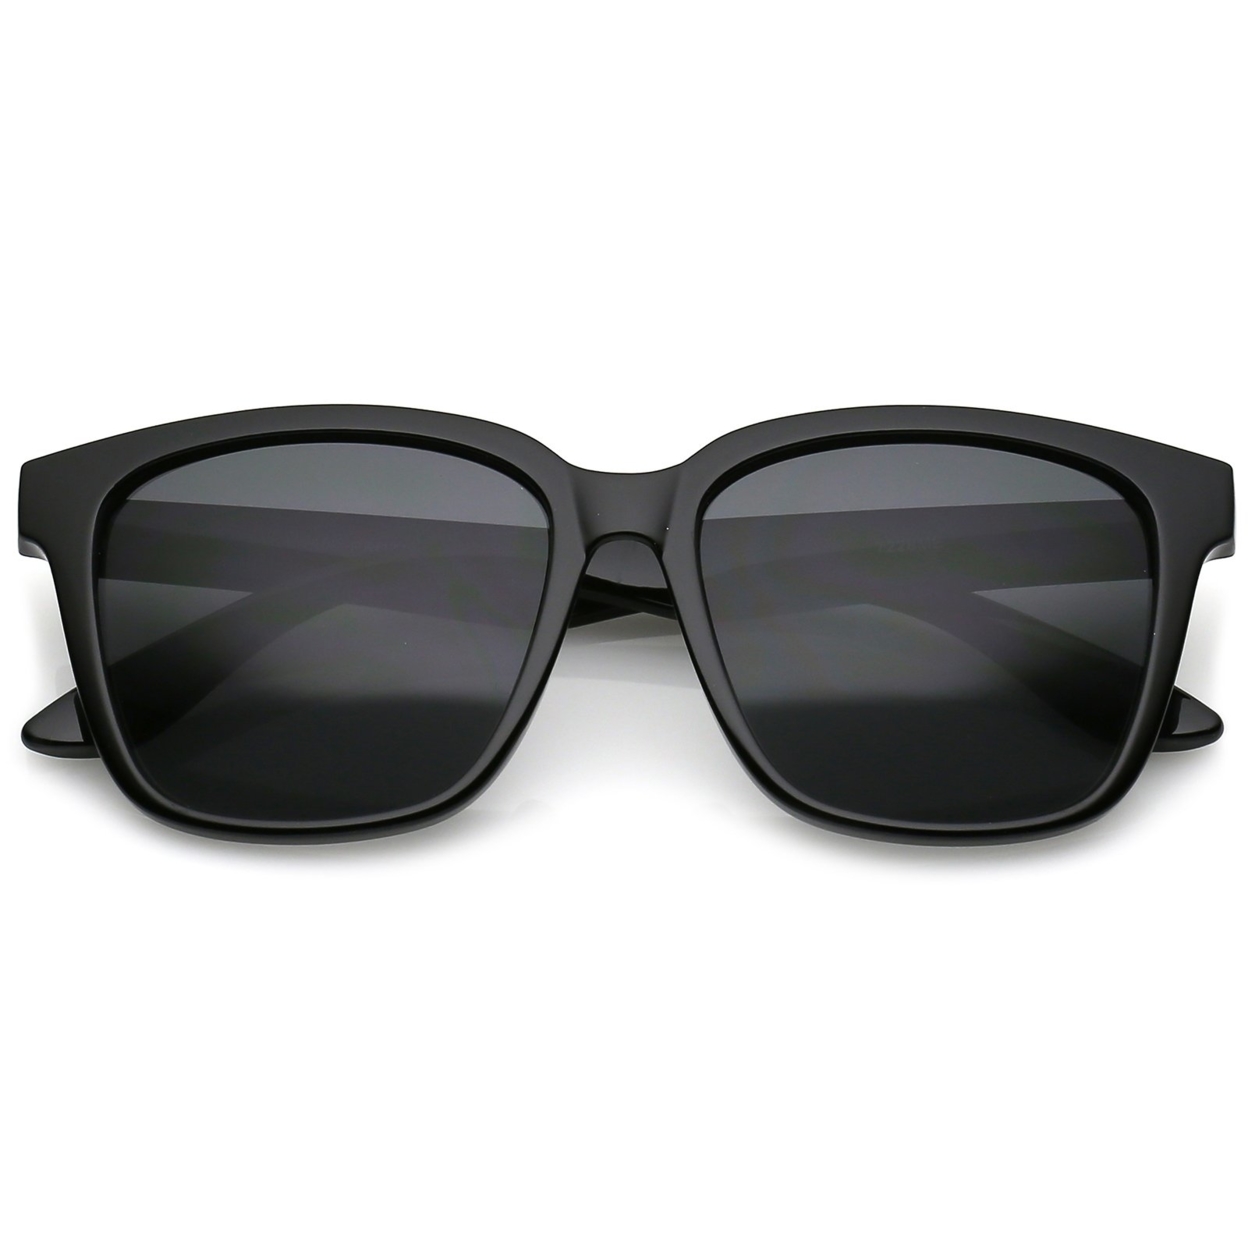 Large Horn Rimmed Sunglasses Wide Arms Square Lens 57mm - Matte Black / Smoke